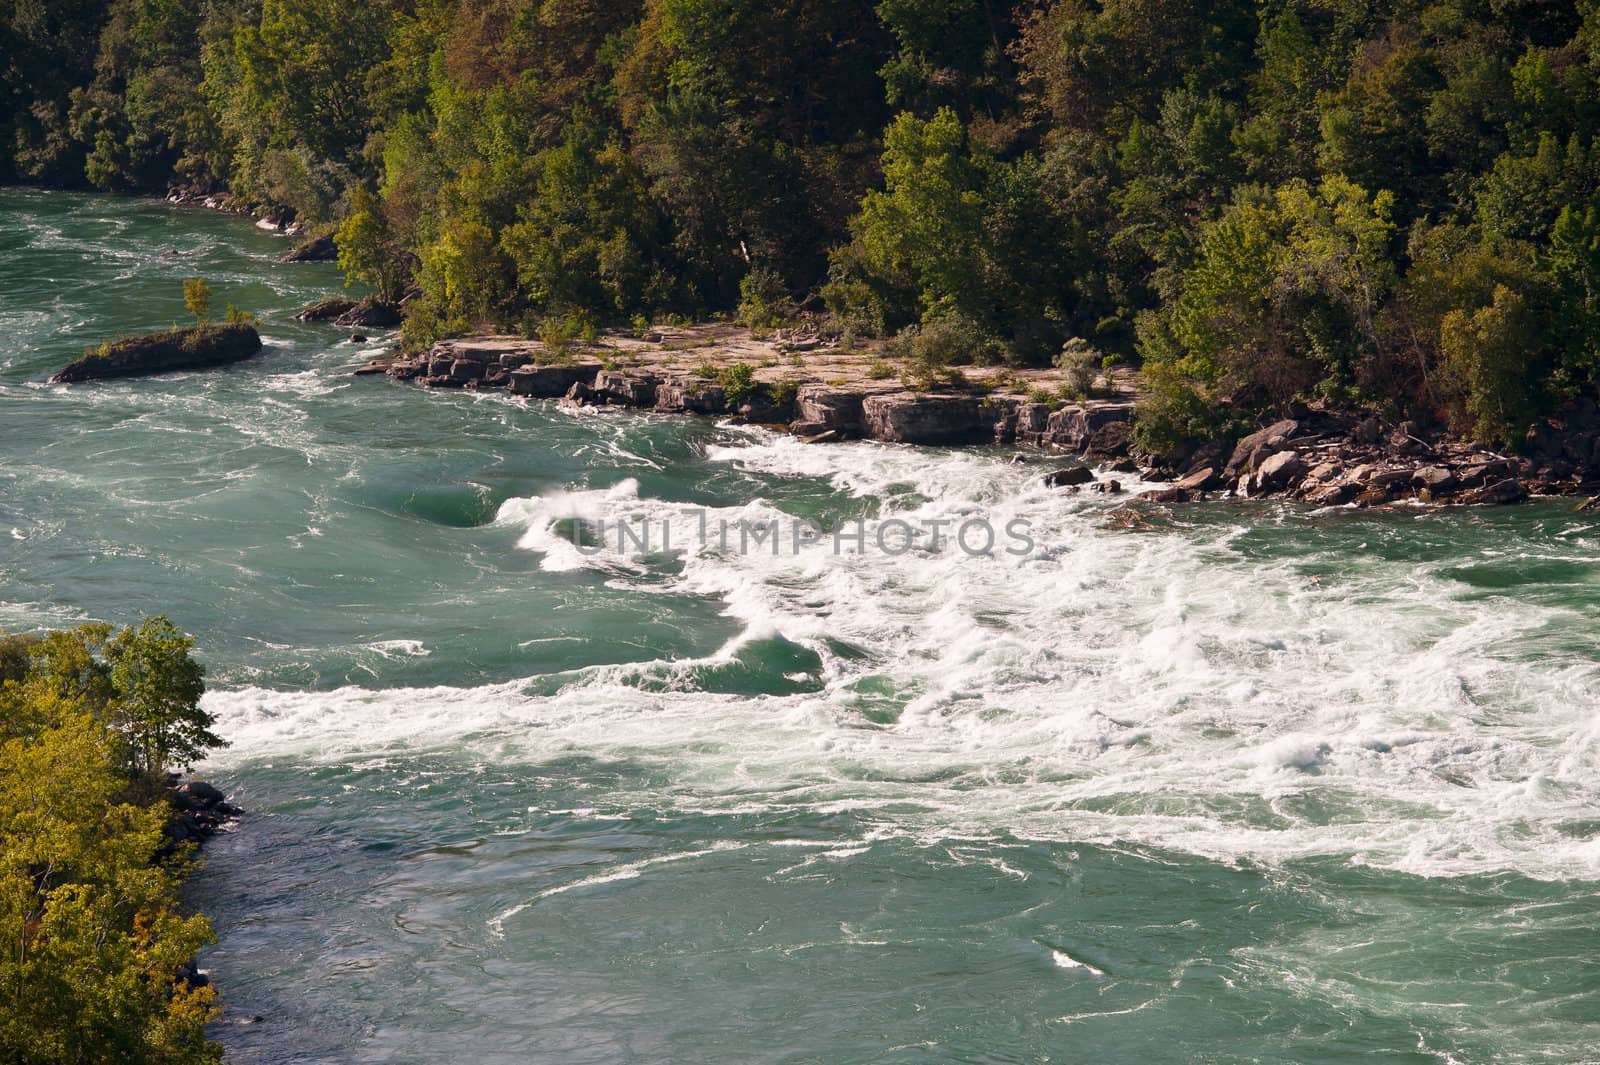 Niagara river rapids by Marcus